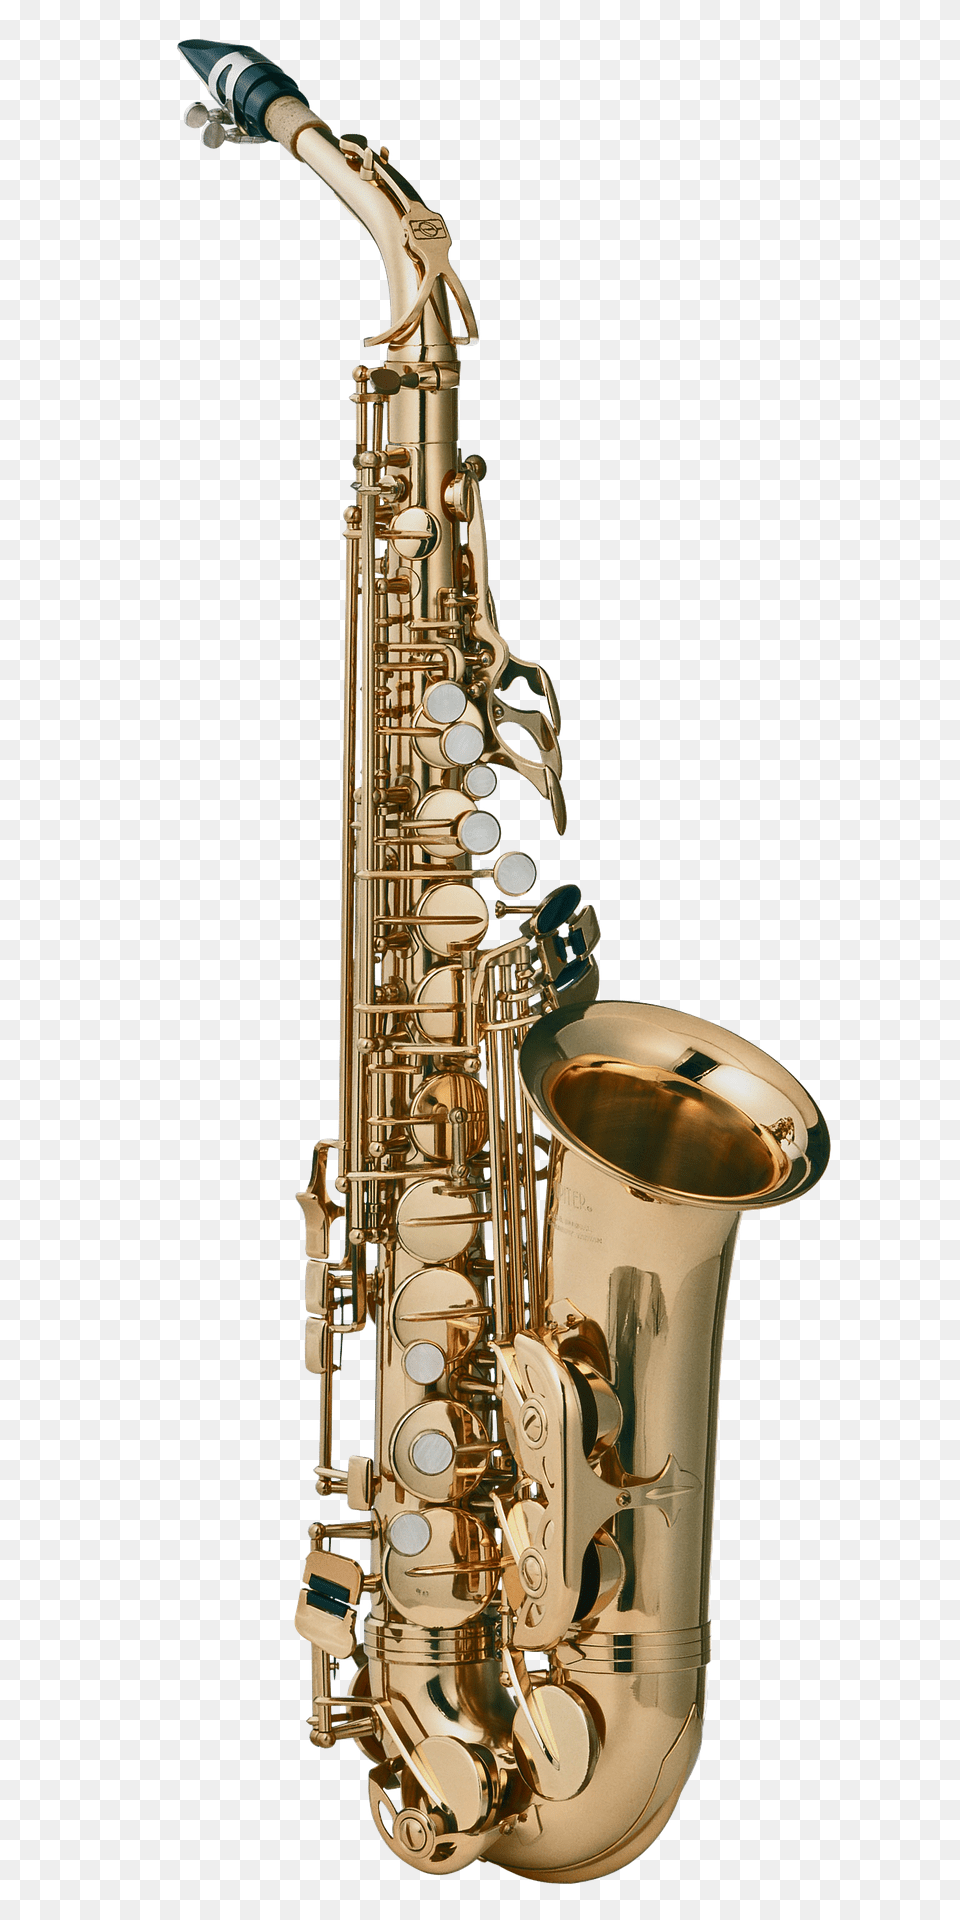 Saxophone Musical Instrument, Smoke Pipe Png Image